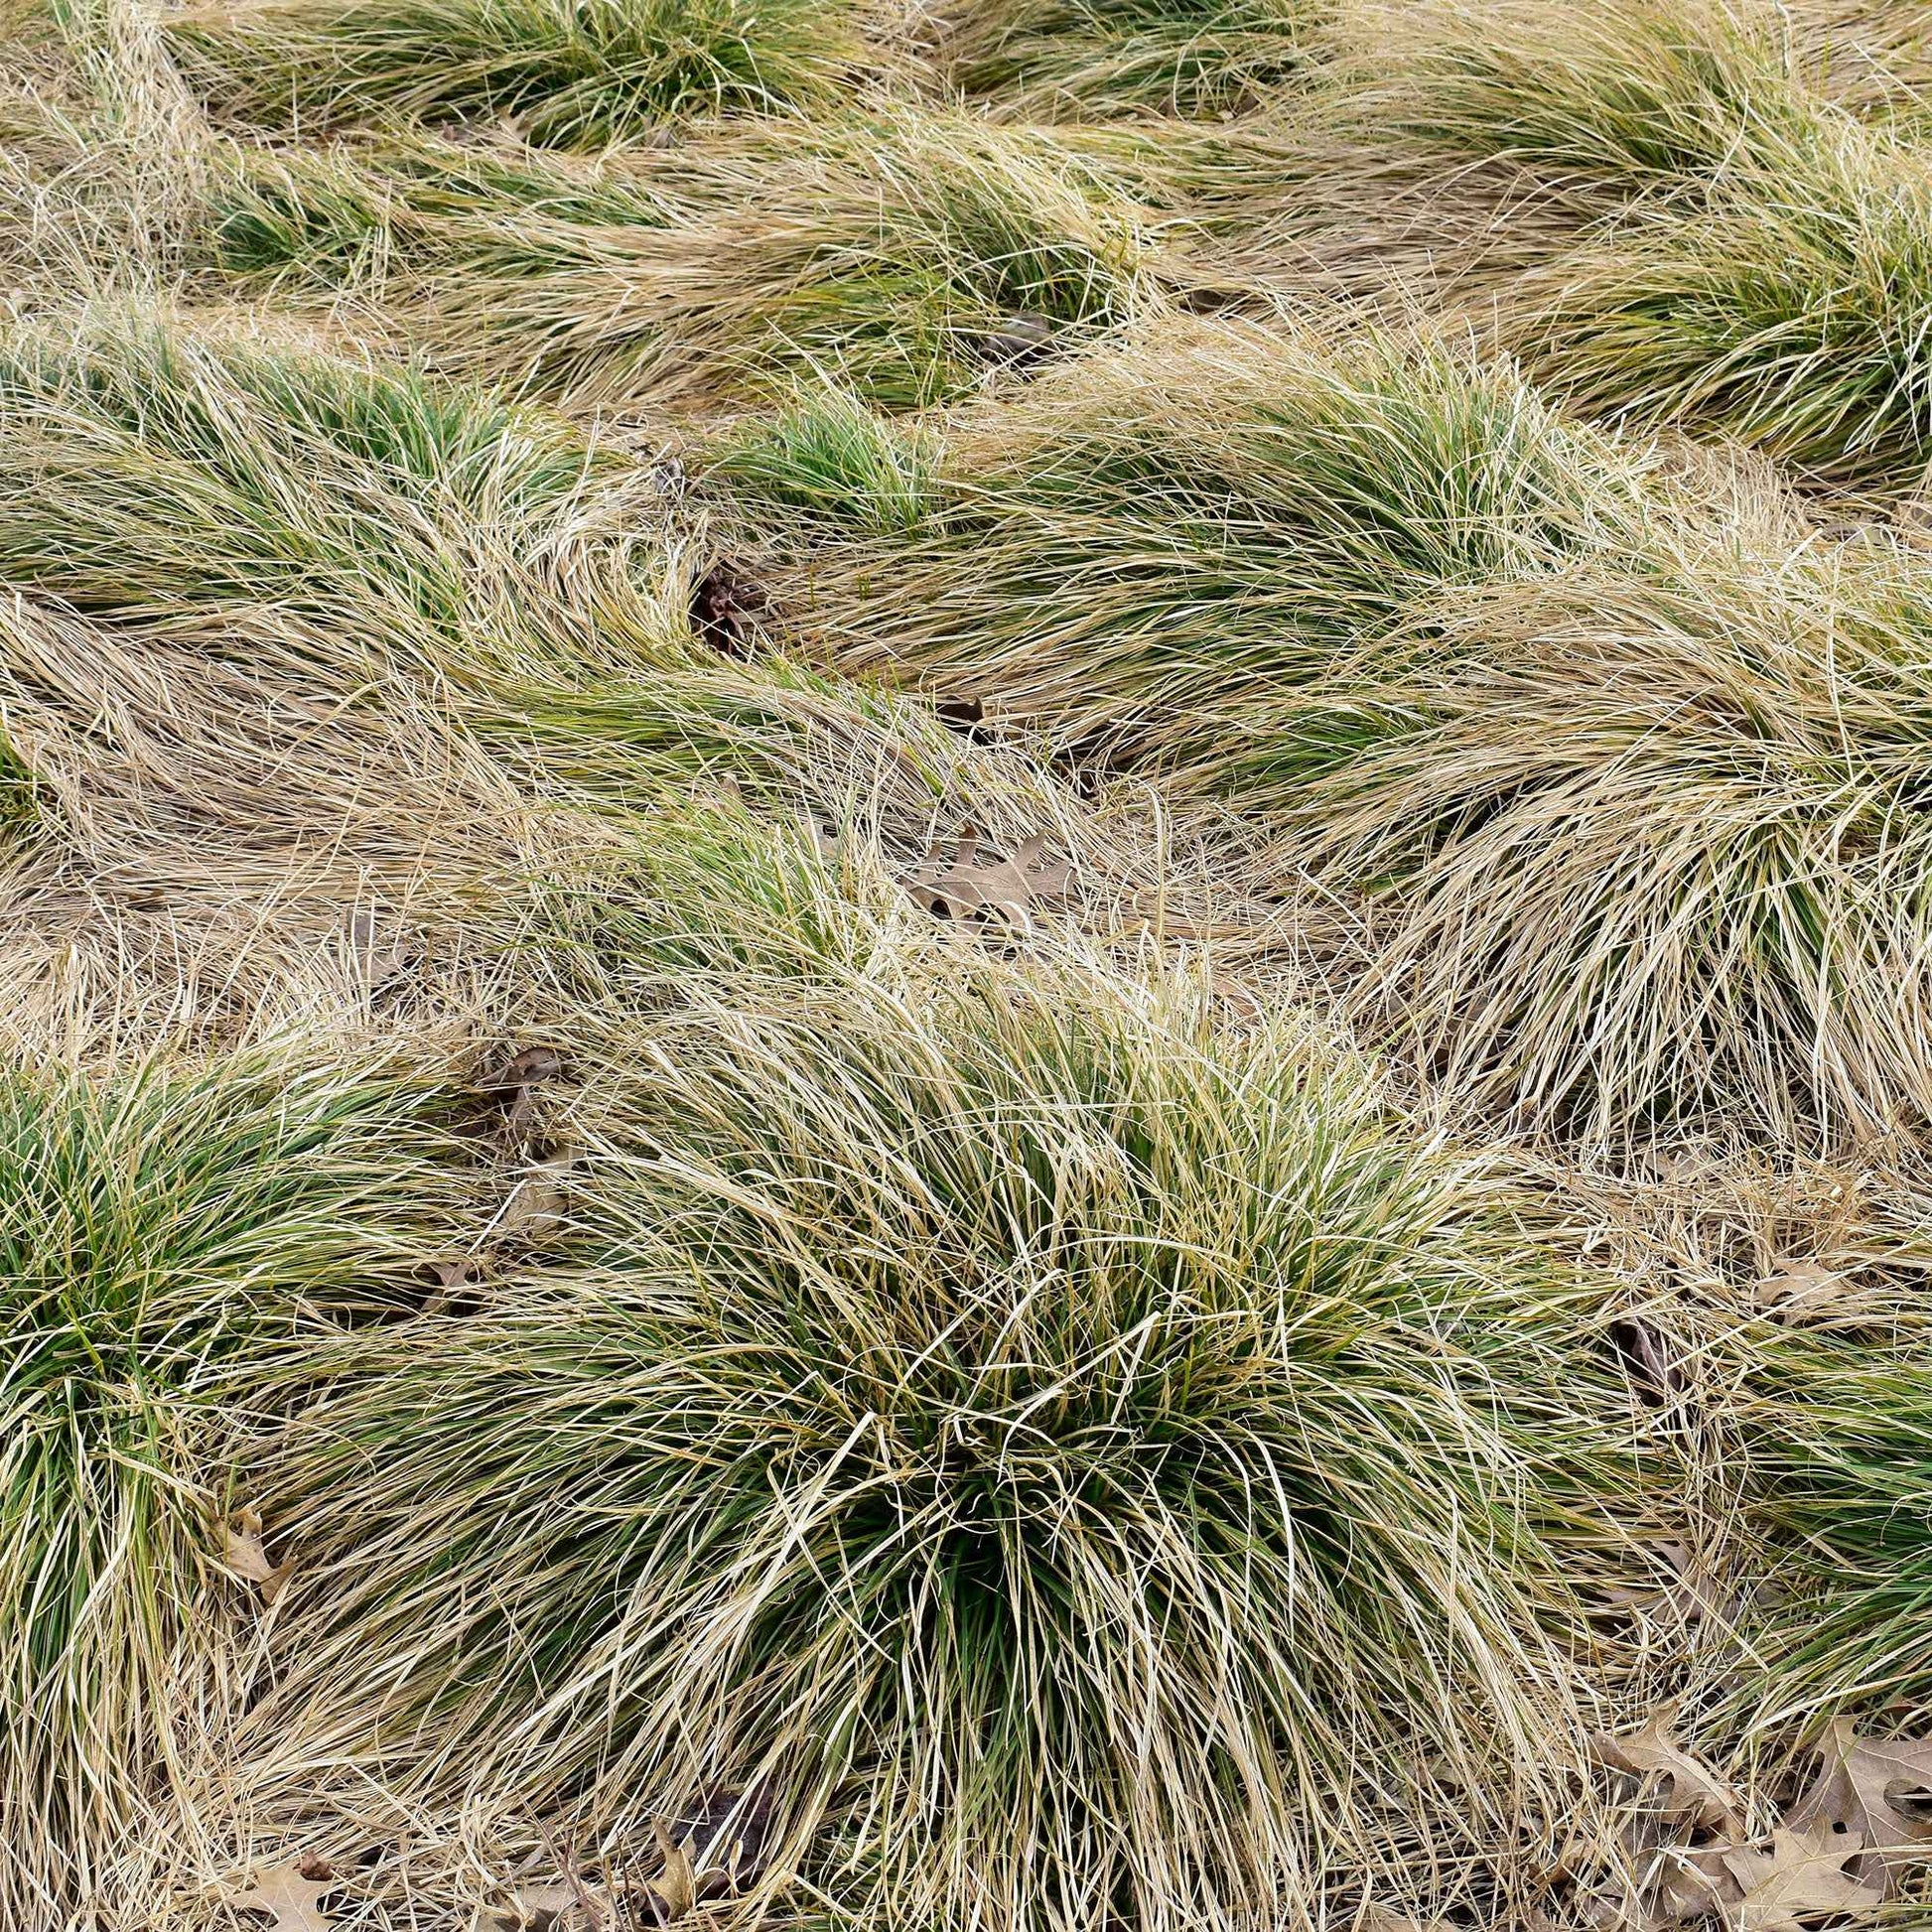 Segge 'Frosted Curls' - Carex comans frosted curls - Sträucher und Stauden